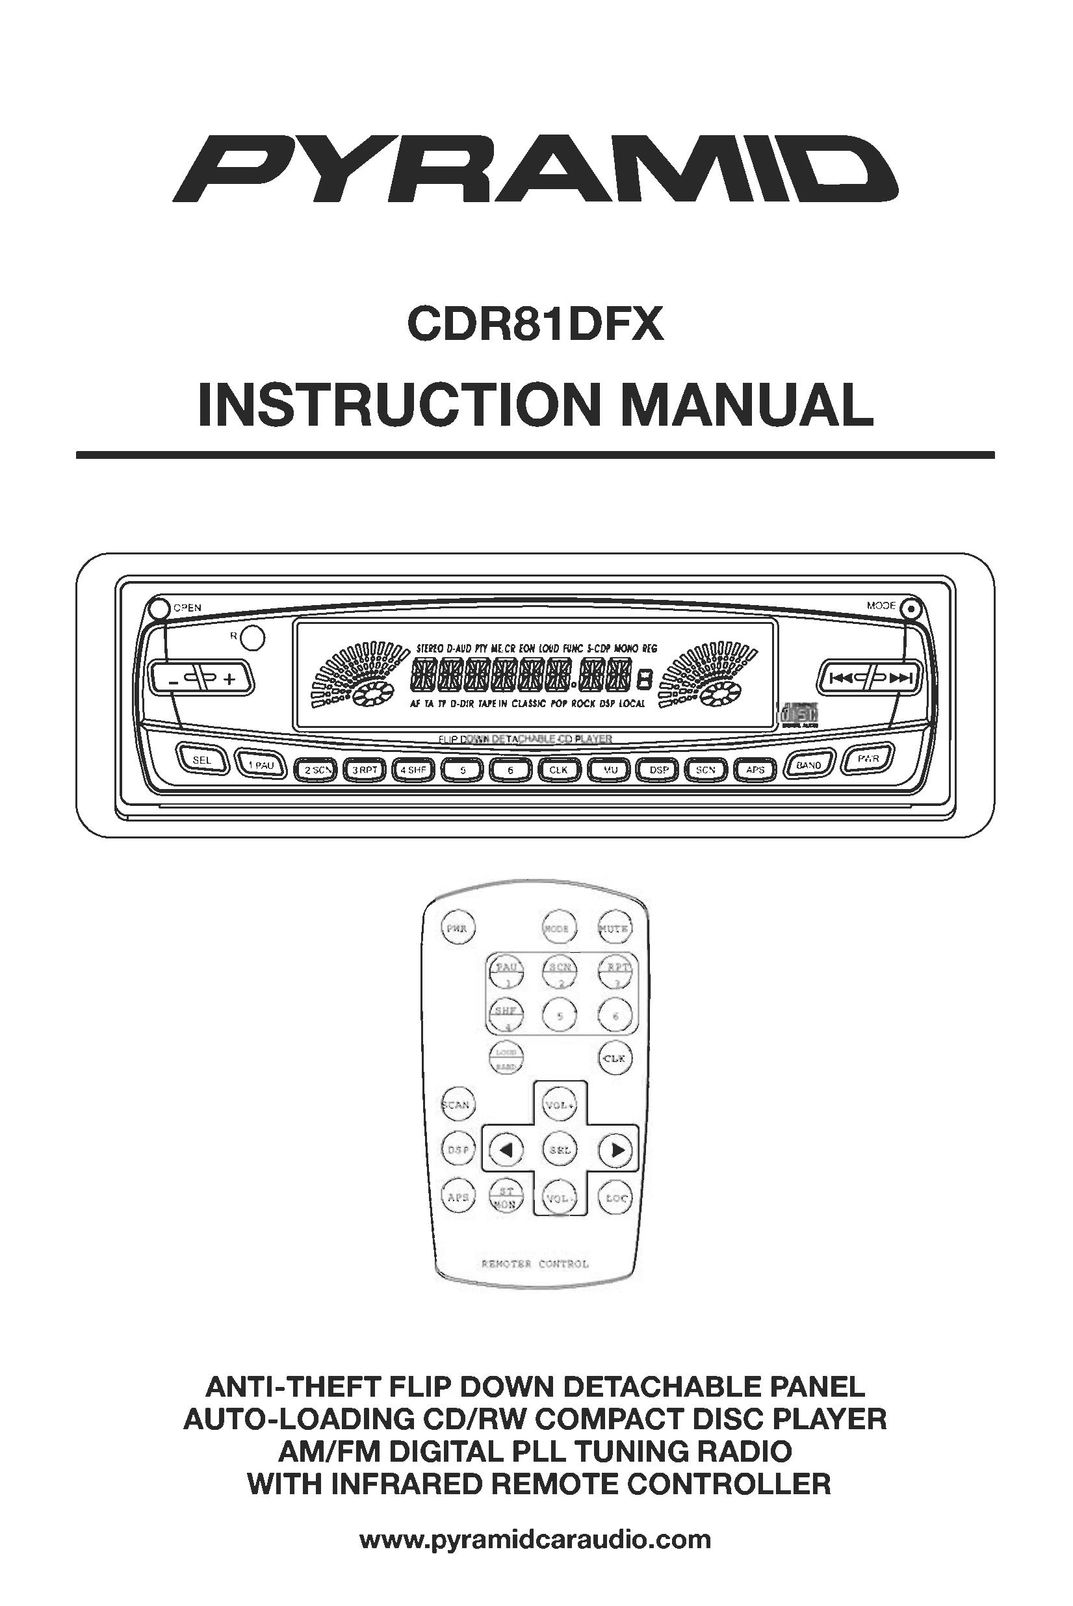 Pyramid Car Audio CDR81DFX Car Stereo System User Manual